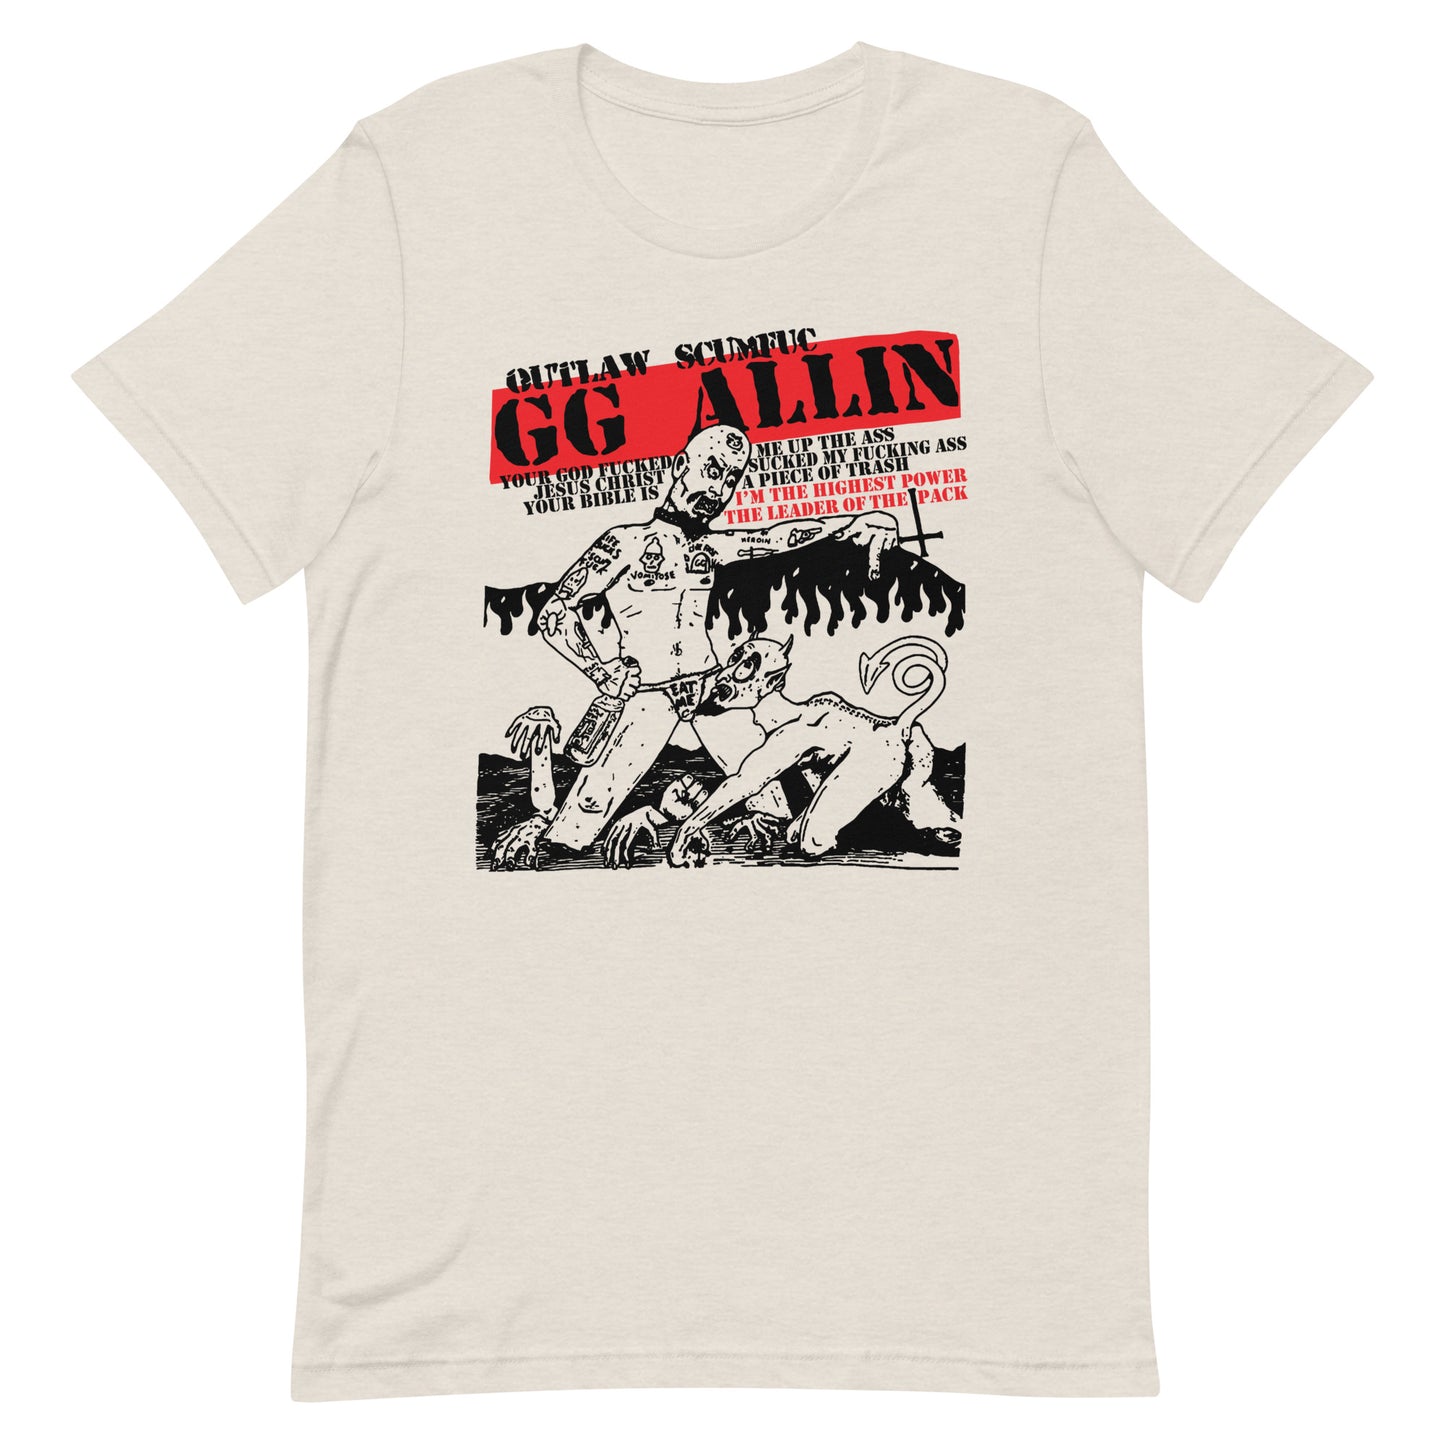 GG Allin - Outlaw Scumfuc T-Shirt